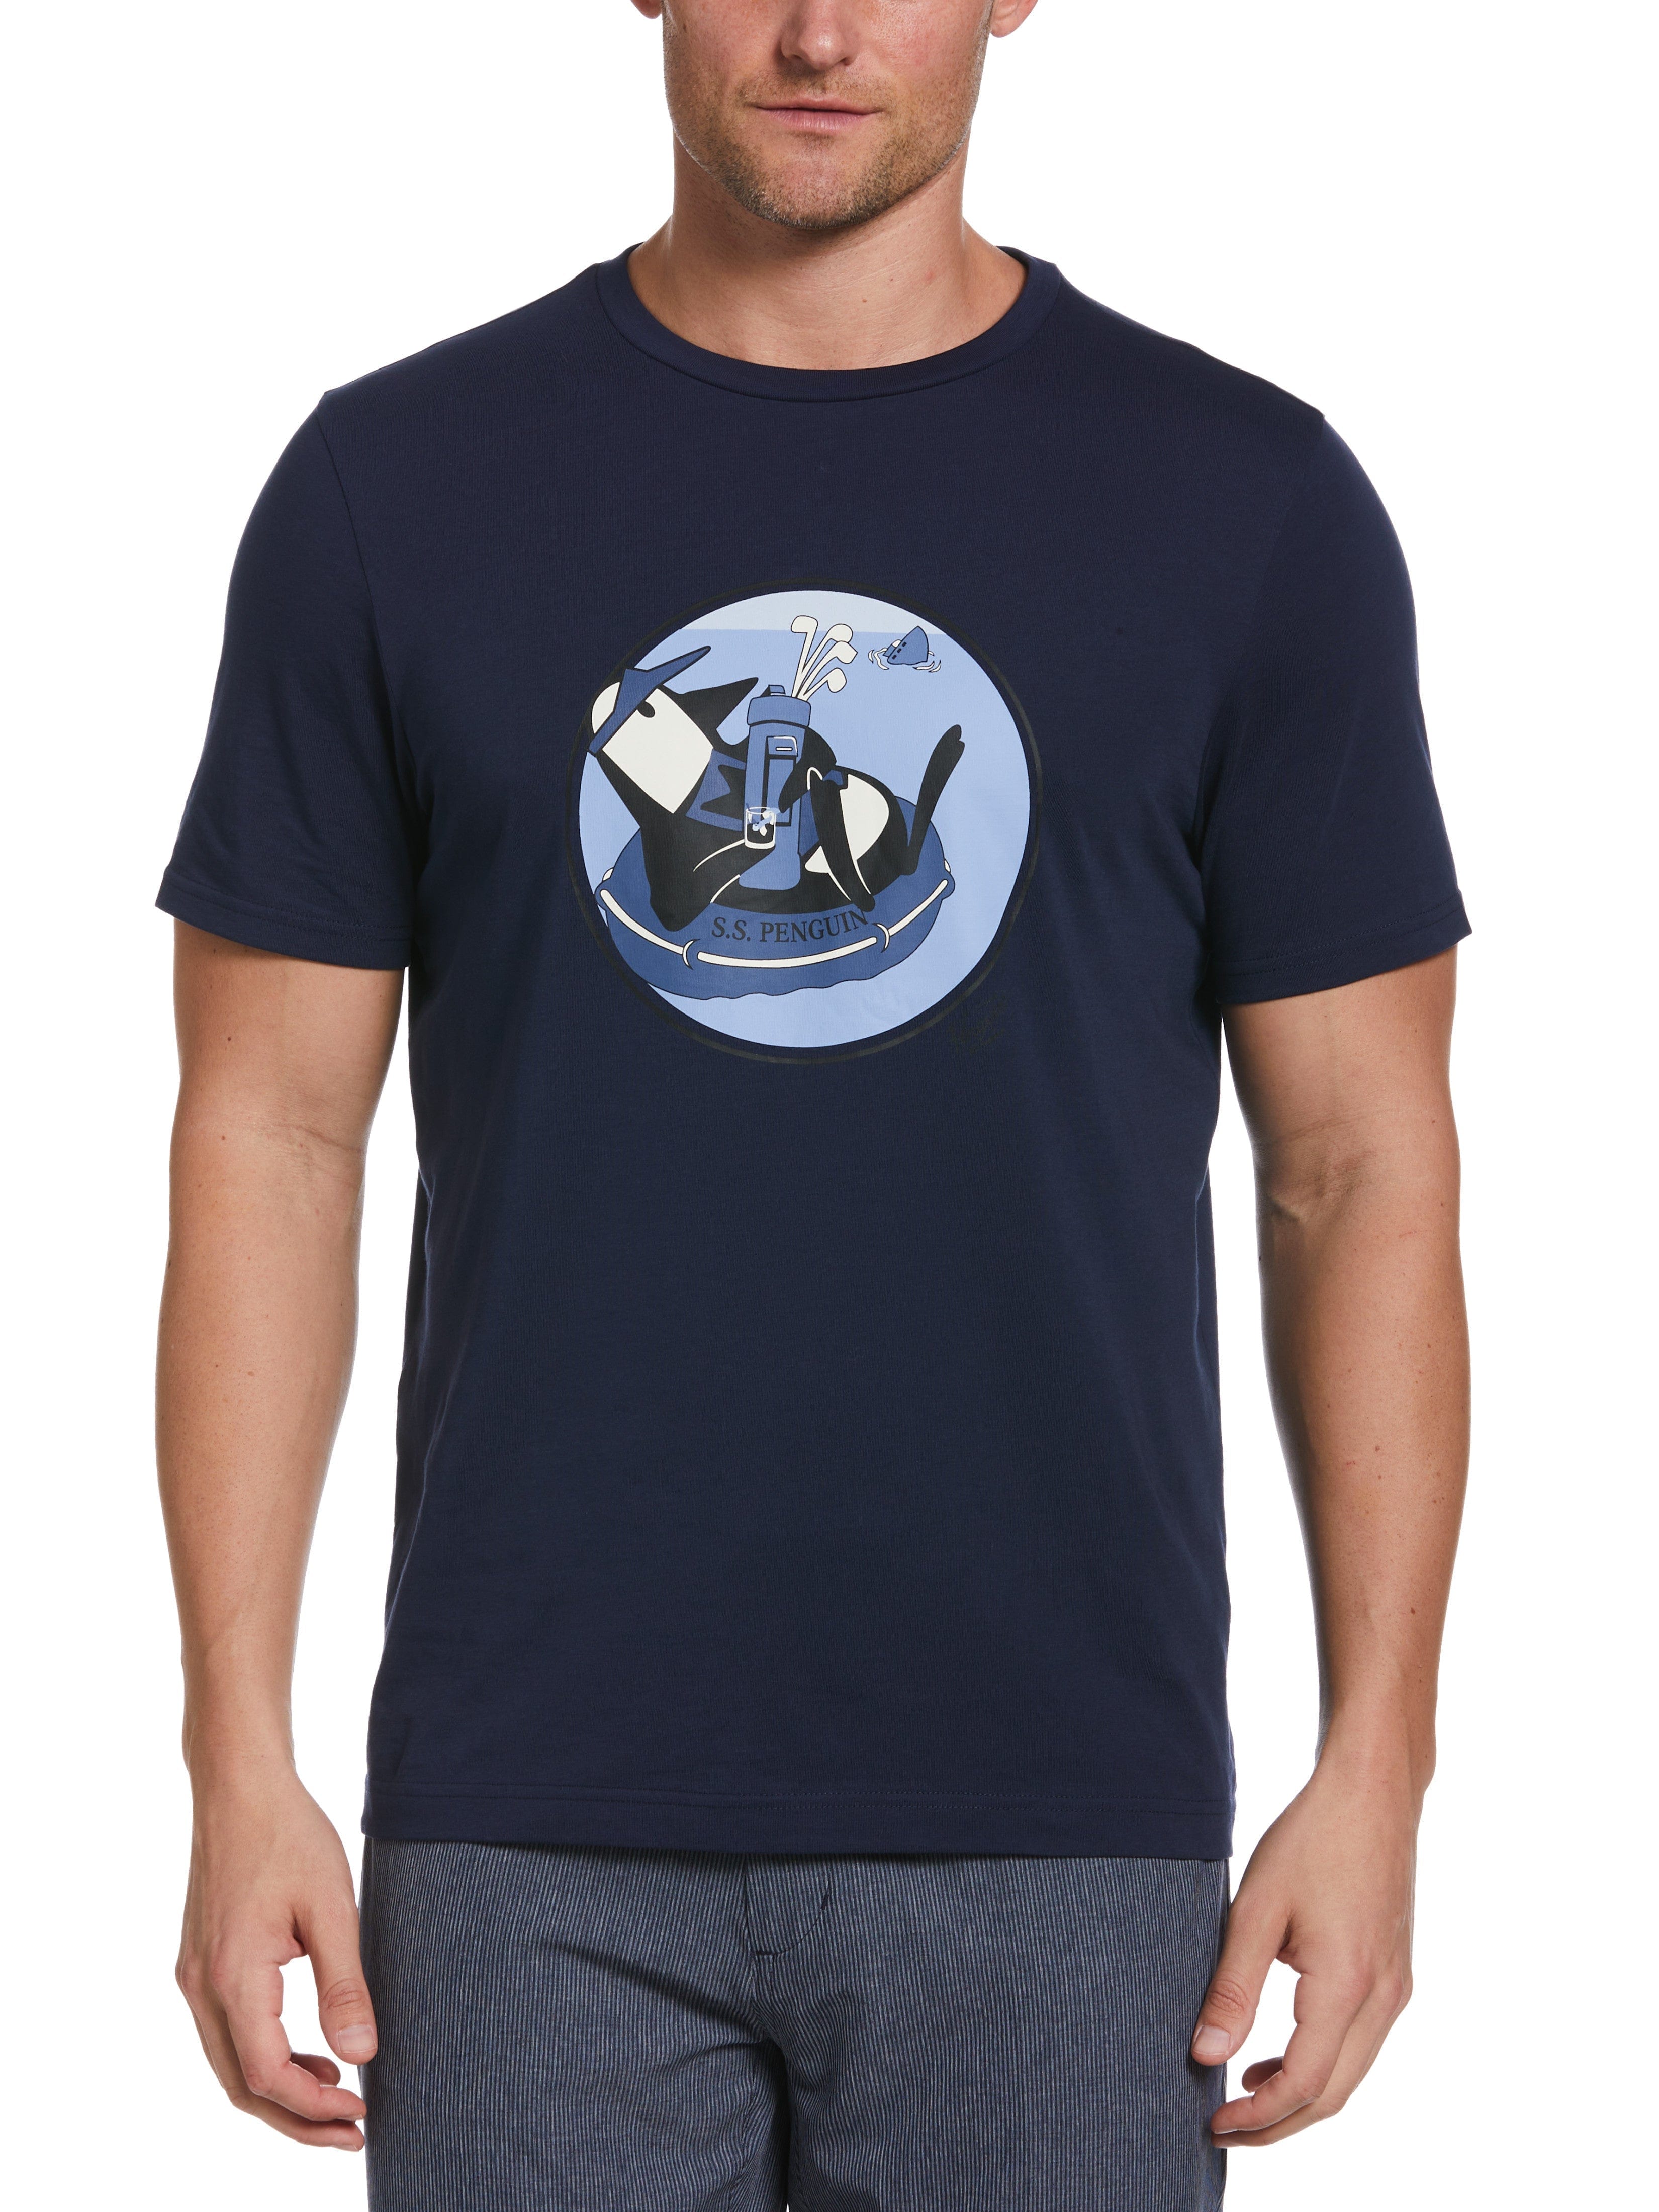 Original Penguin Mens Shipwreck Pete Graphic Golf T-Shirt, Size Medium, Dark Navy Blue, 100% Cotton | Golf Apparel Shop